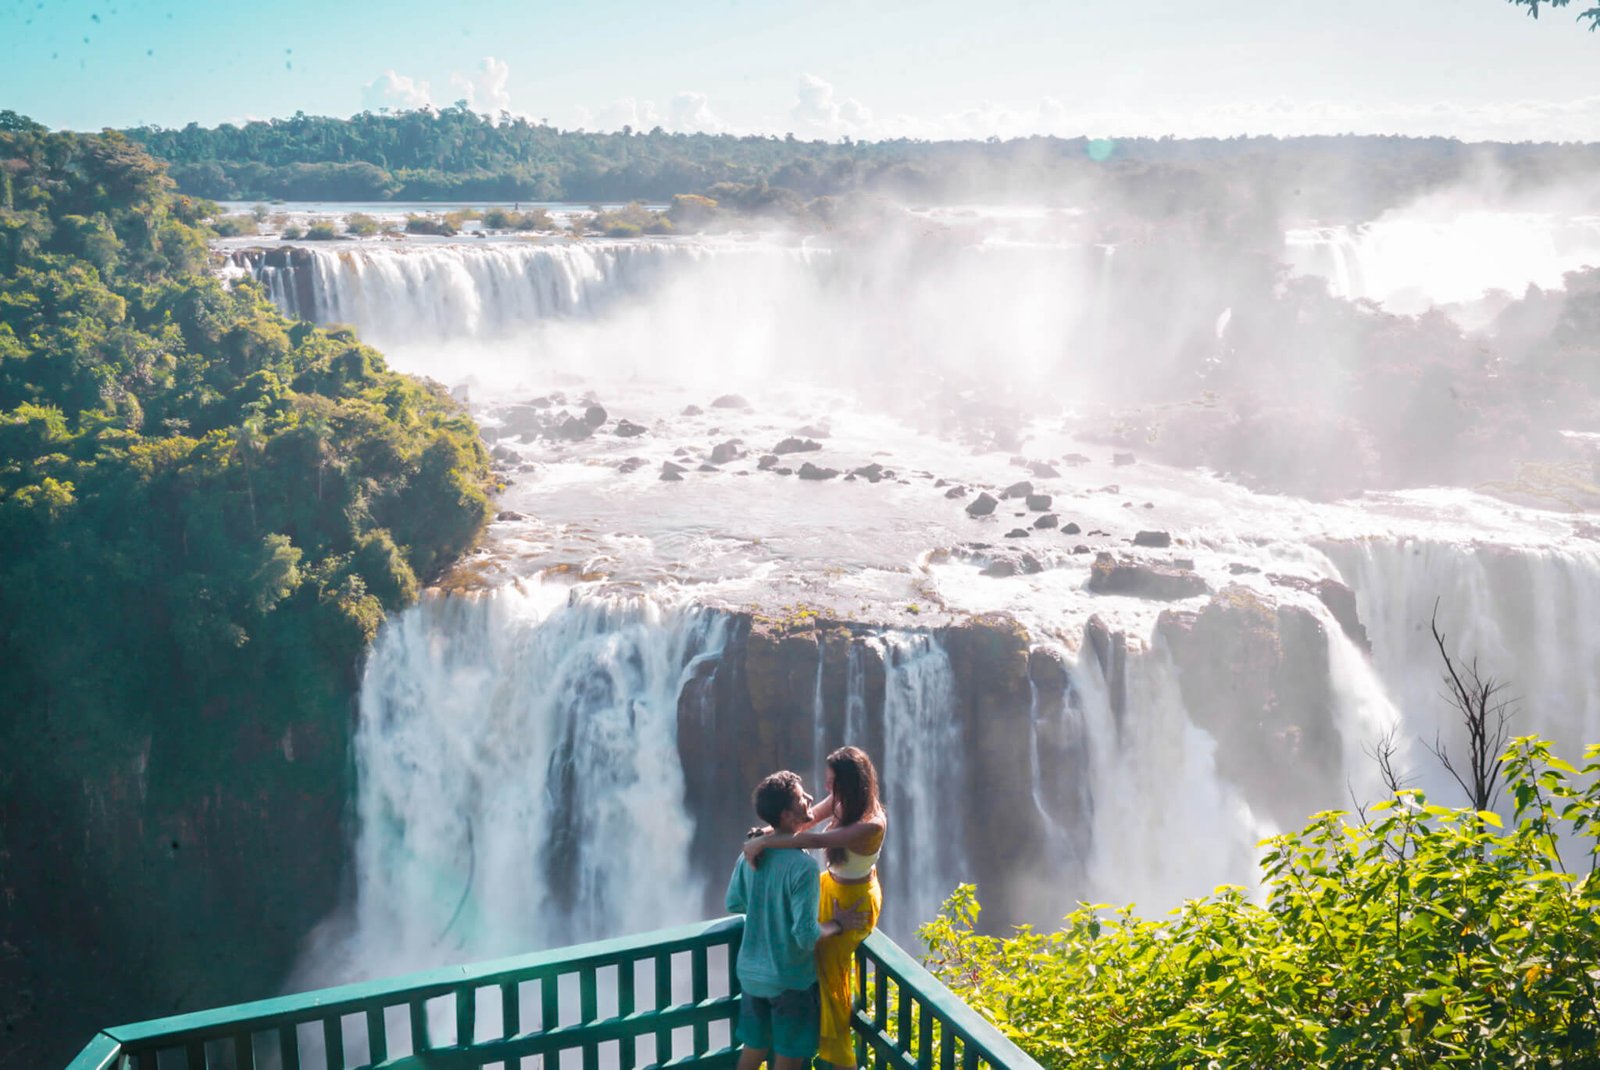 Brazil side of Iguazu Falls viewpoint